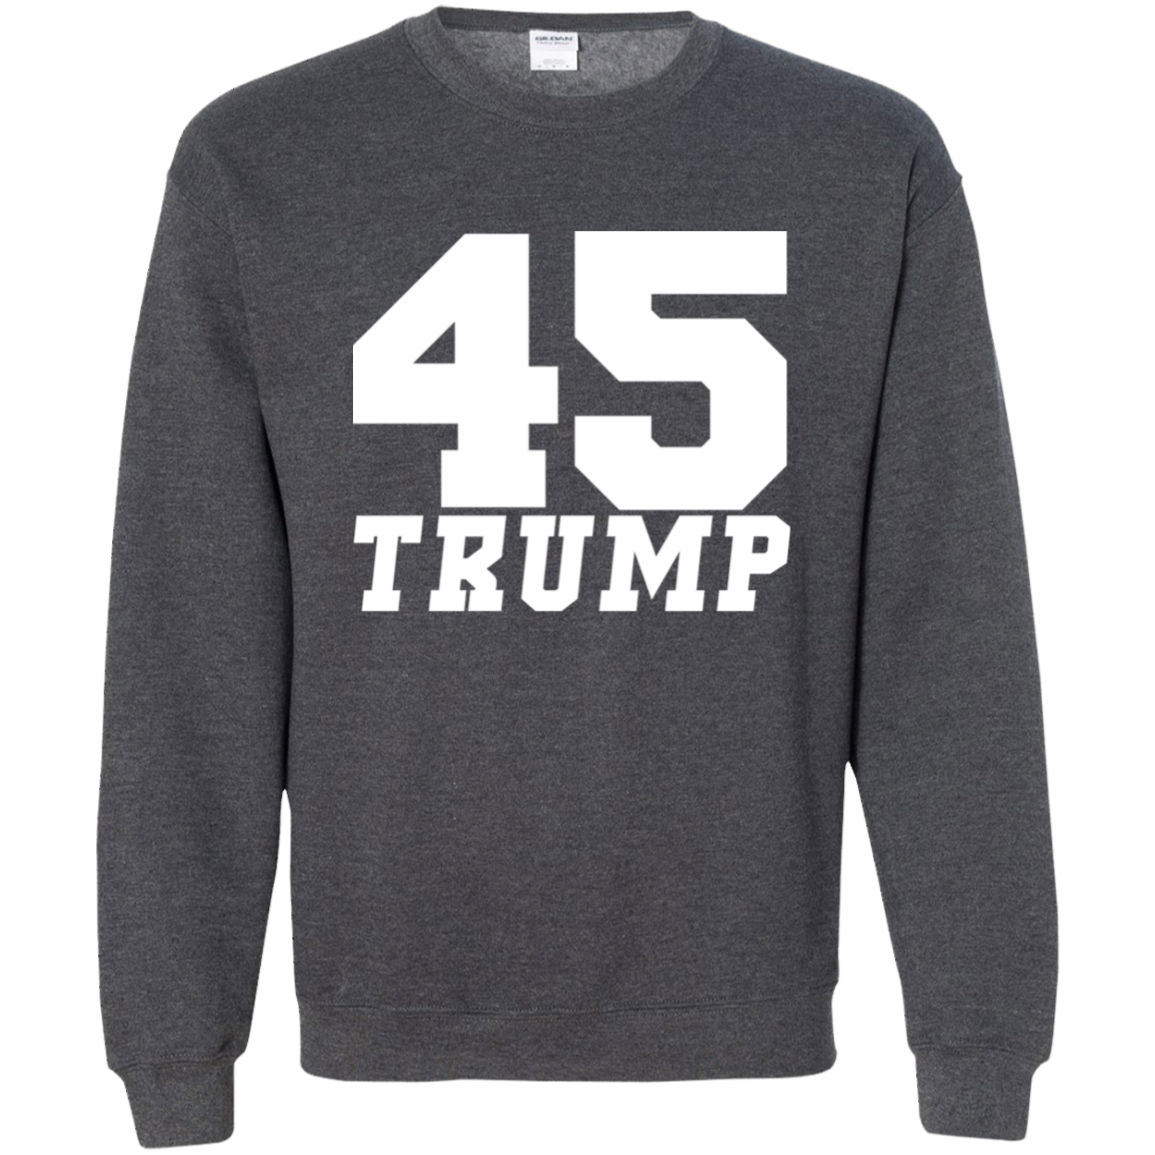 45 Trump Sweatshirt